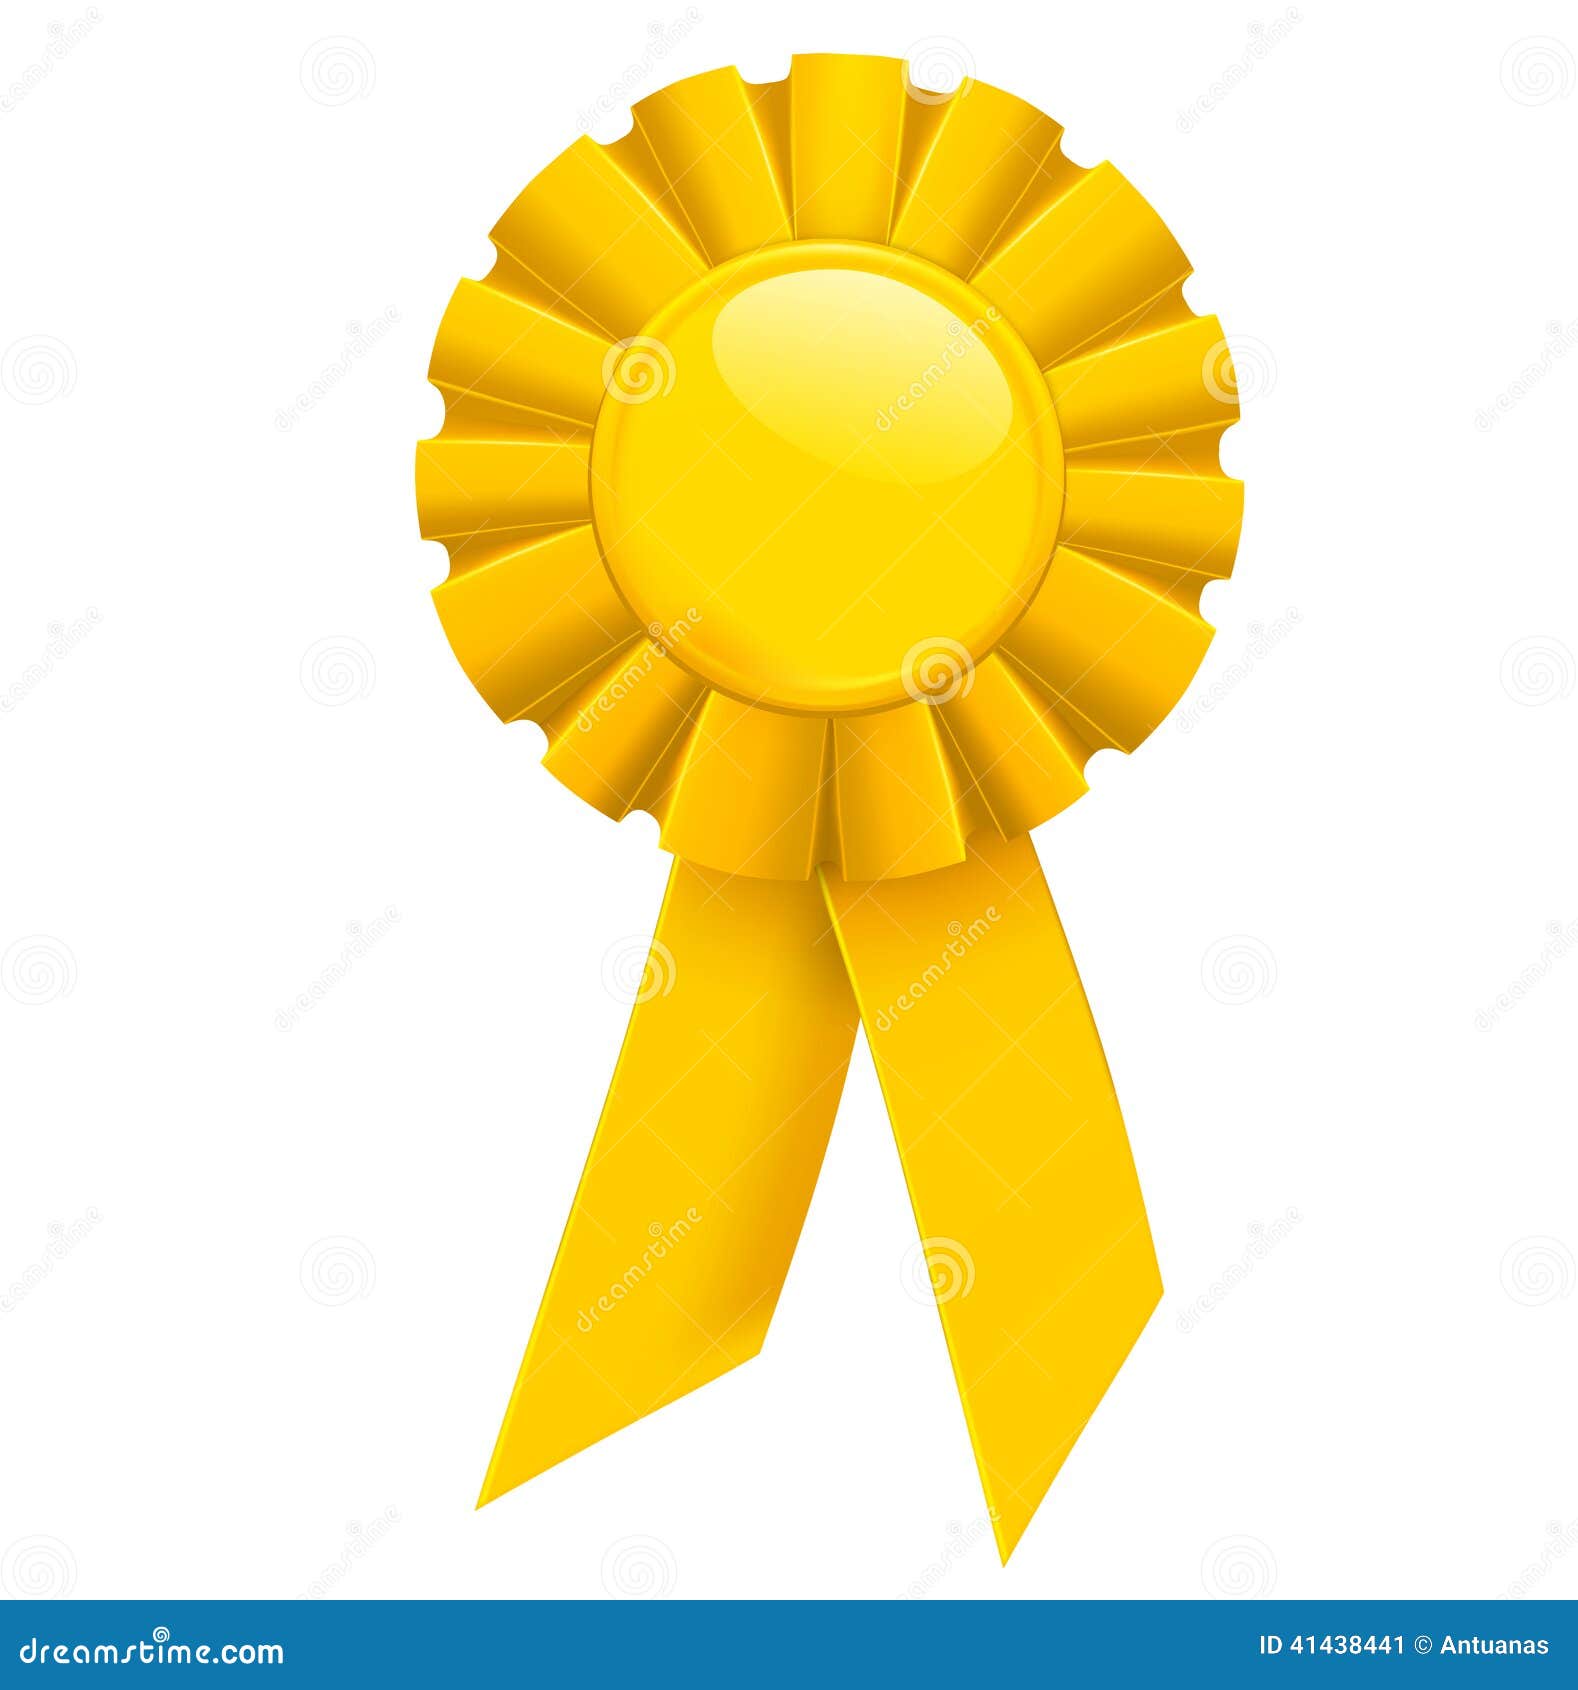 free clip art yellow ribbon award - photo #25